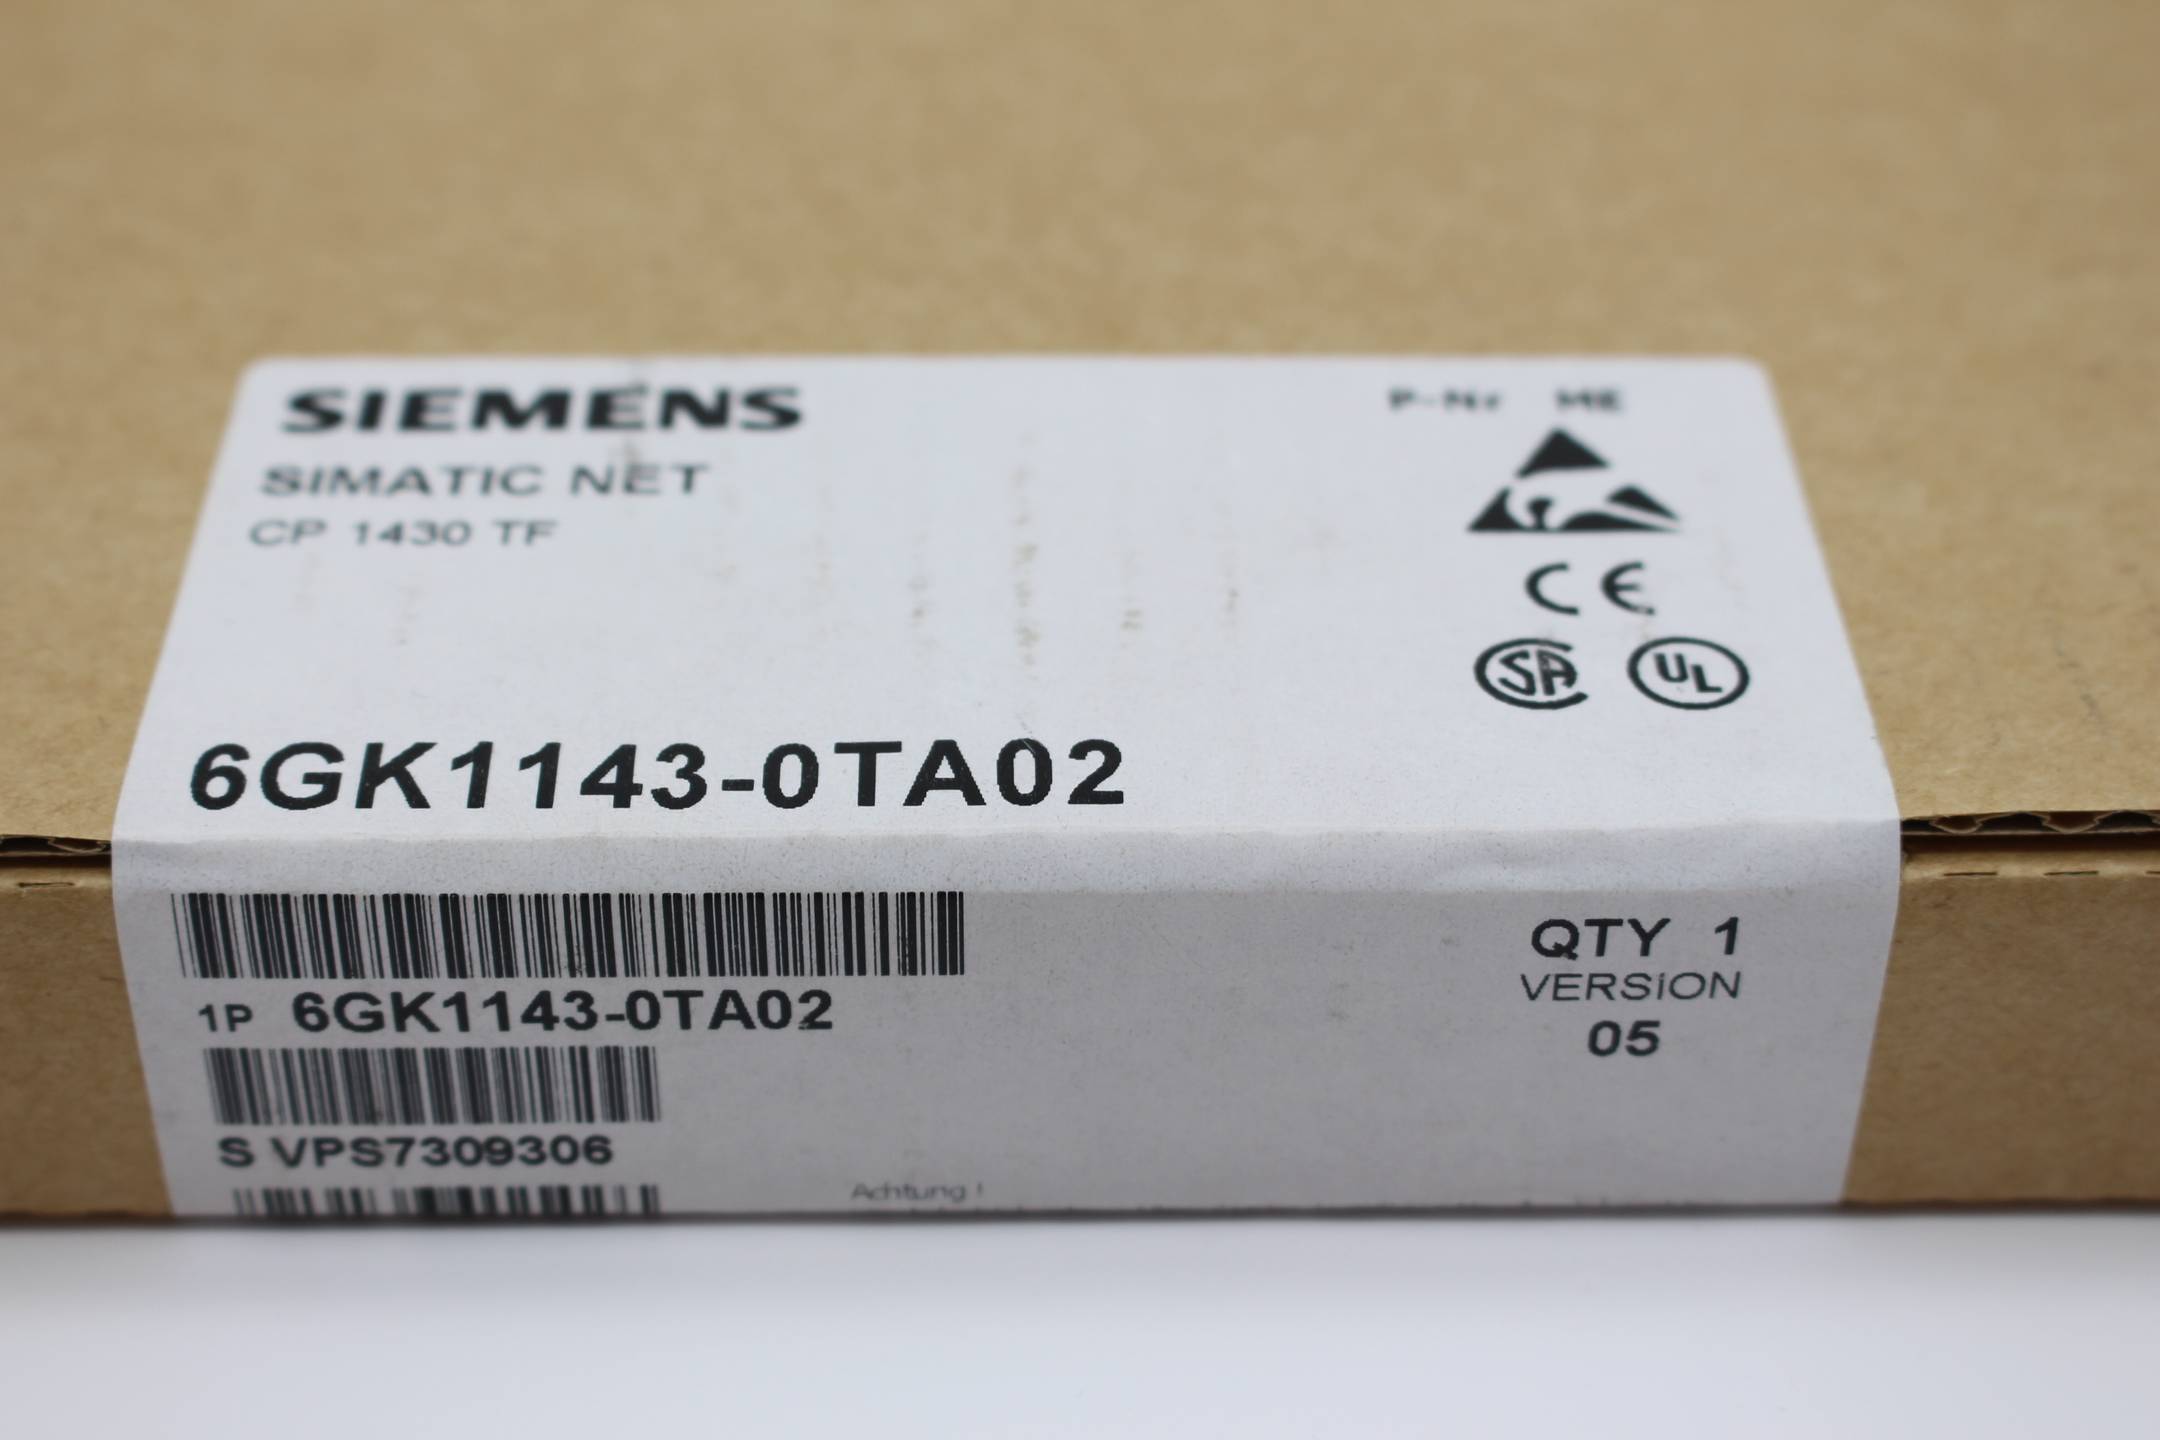 Siemens SIMATIC NET CP 1430 TF 6GK1143-0TA02 ( 6GK 1143-0TA02 )